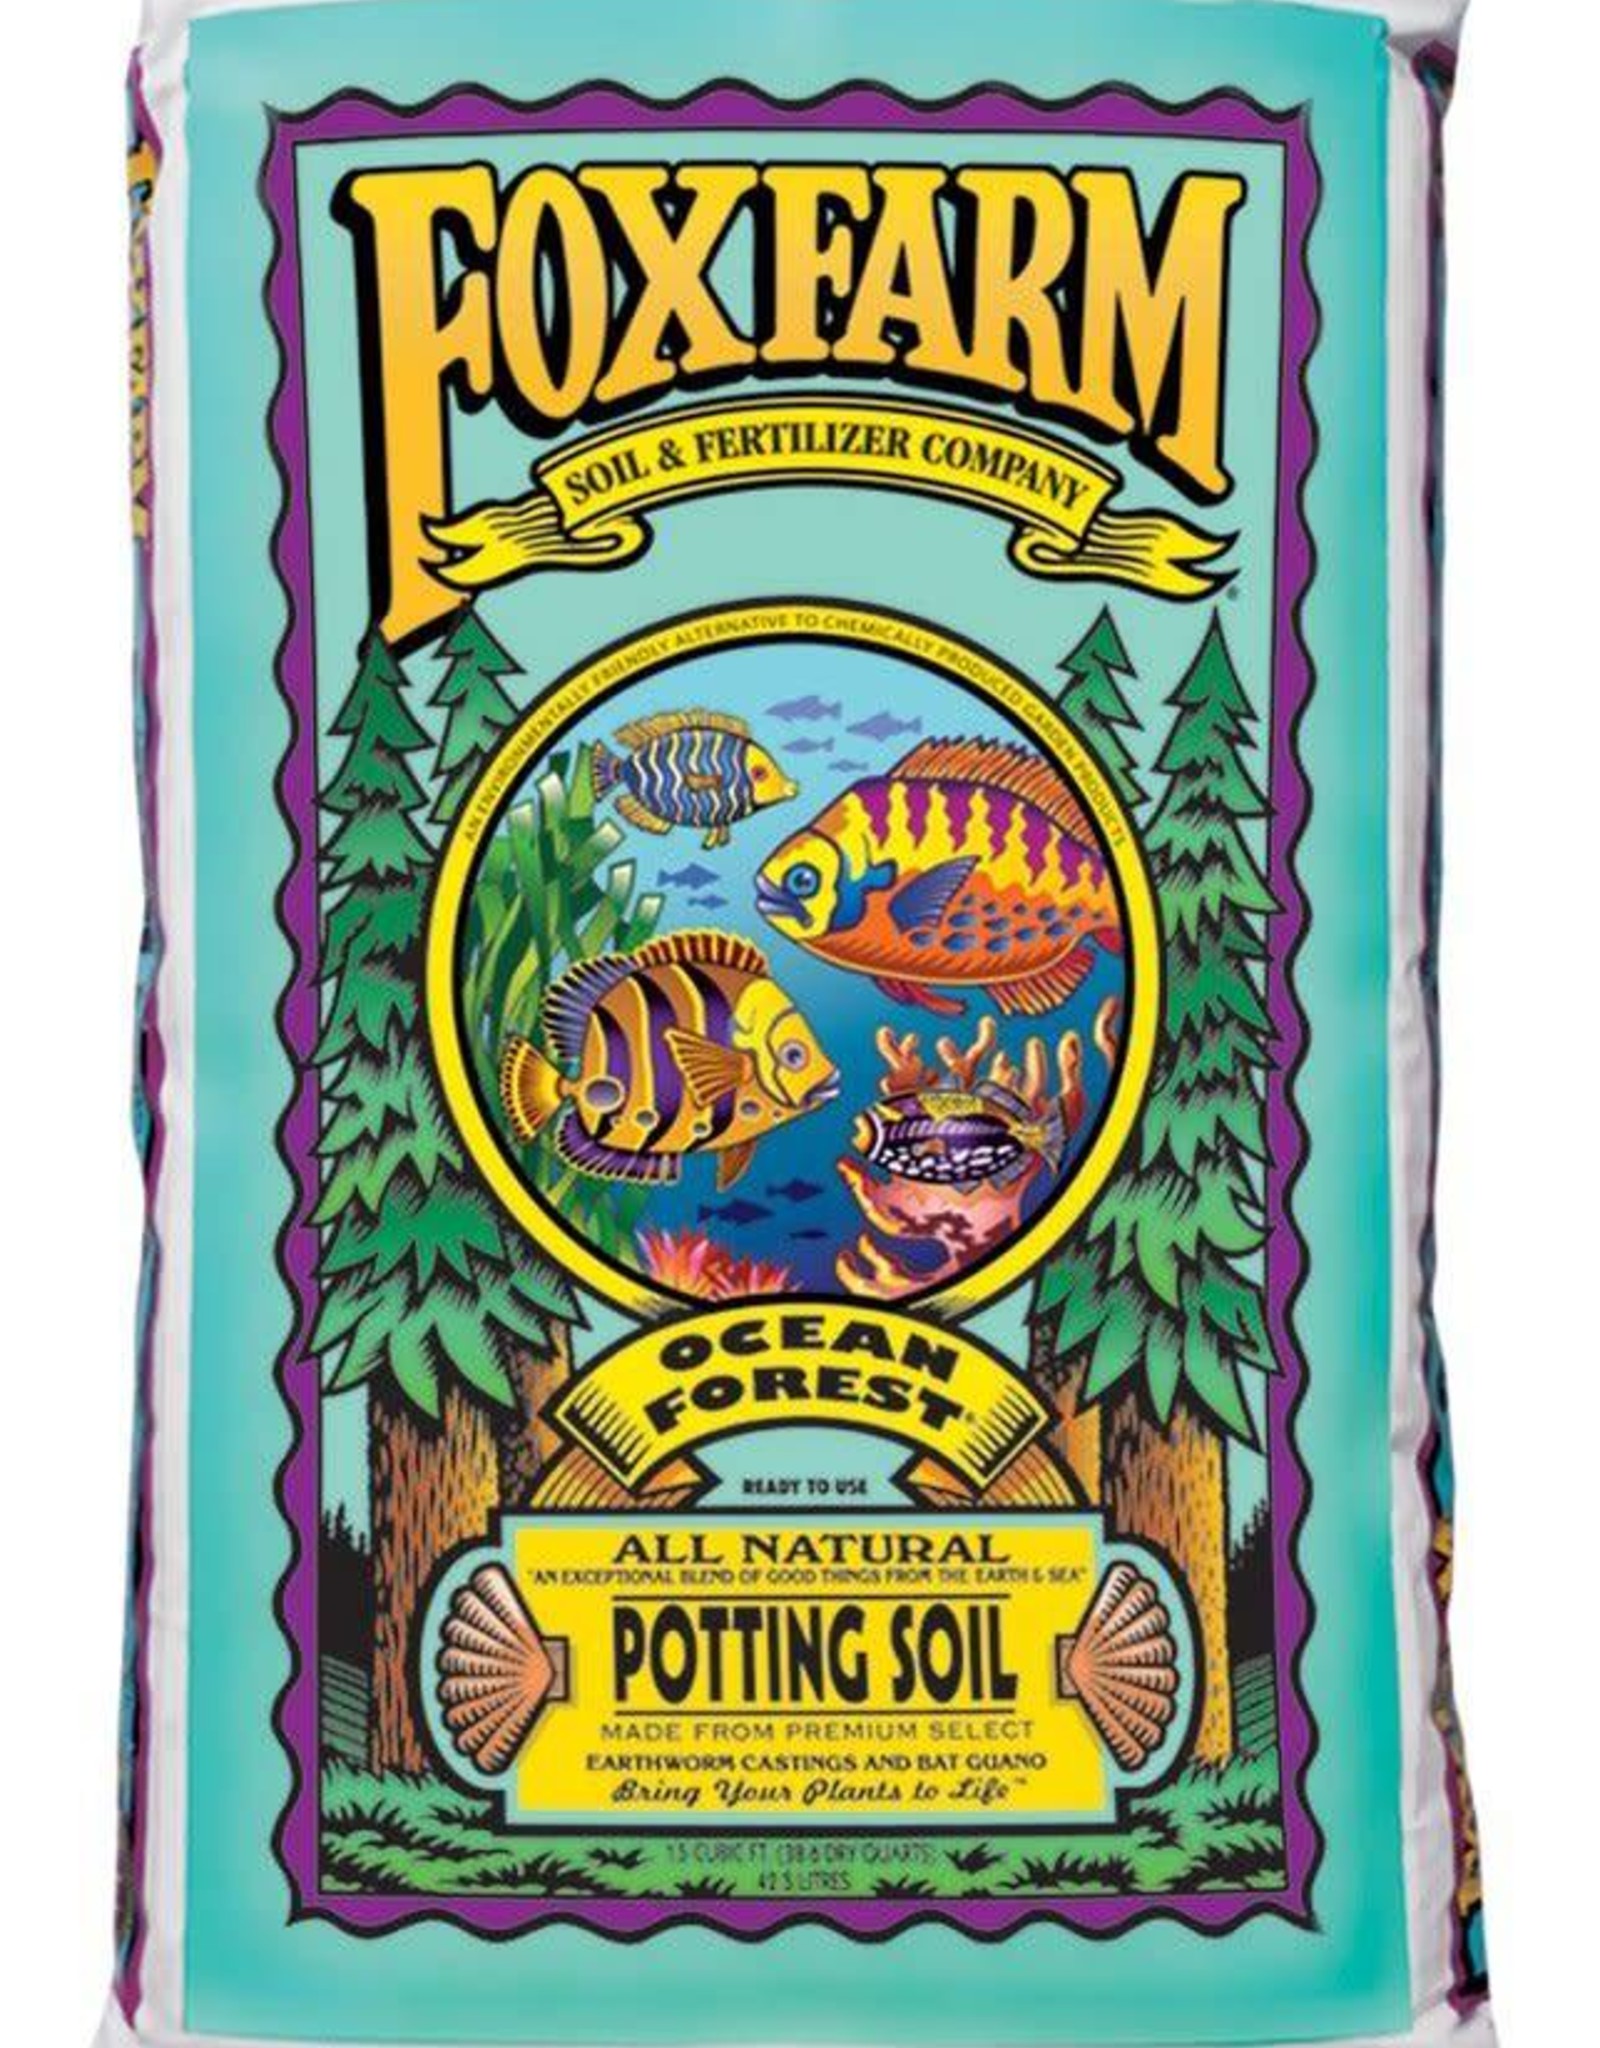 FoxFarm Ocean Forest Potting Soil, 1.5 cu ft